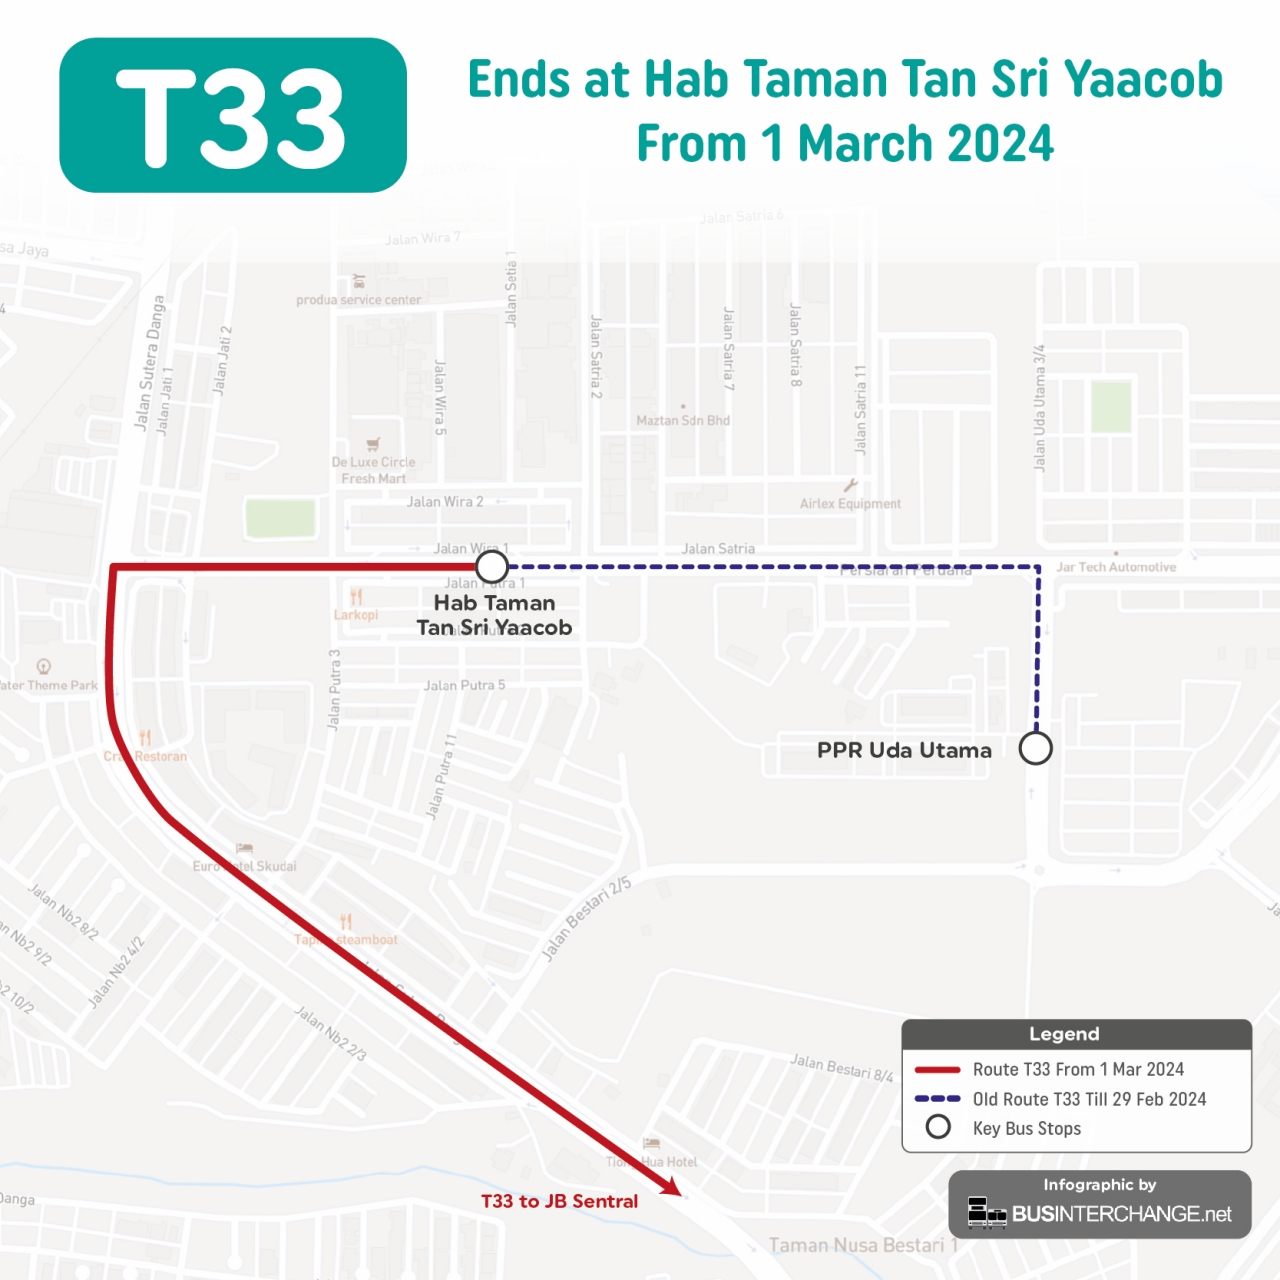 myBas Johor Bahru Route T33 shorten to end at Hab Taman Tan Sri Yaacob from 1 March 2024